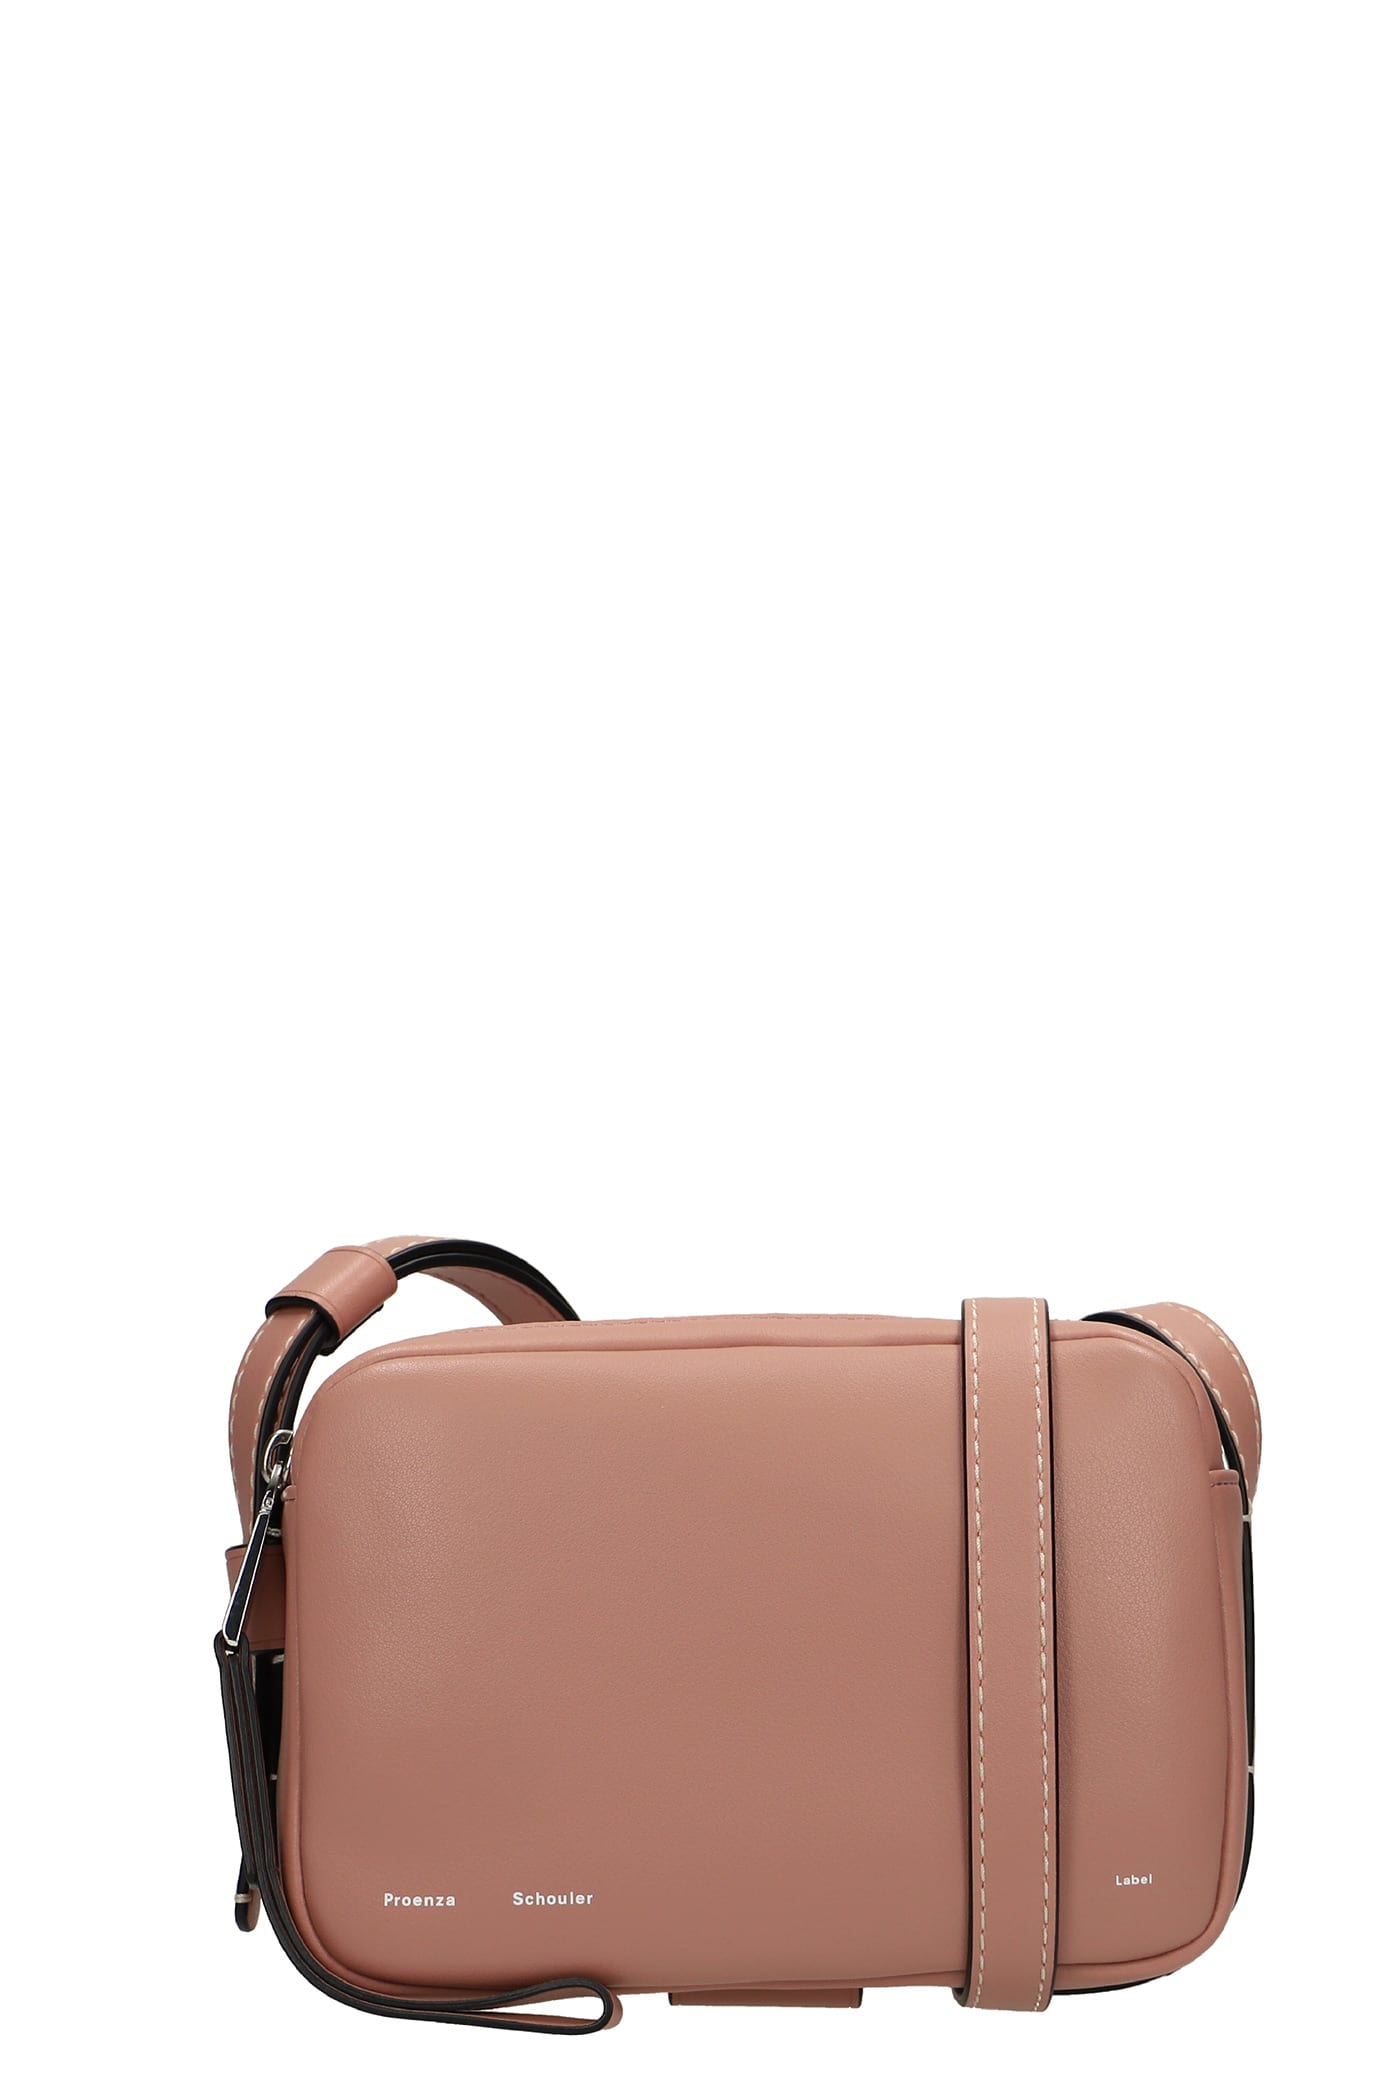 Proenza Schouler Watts Shoulder Bag In Rose-pink Leather